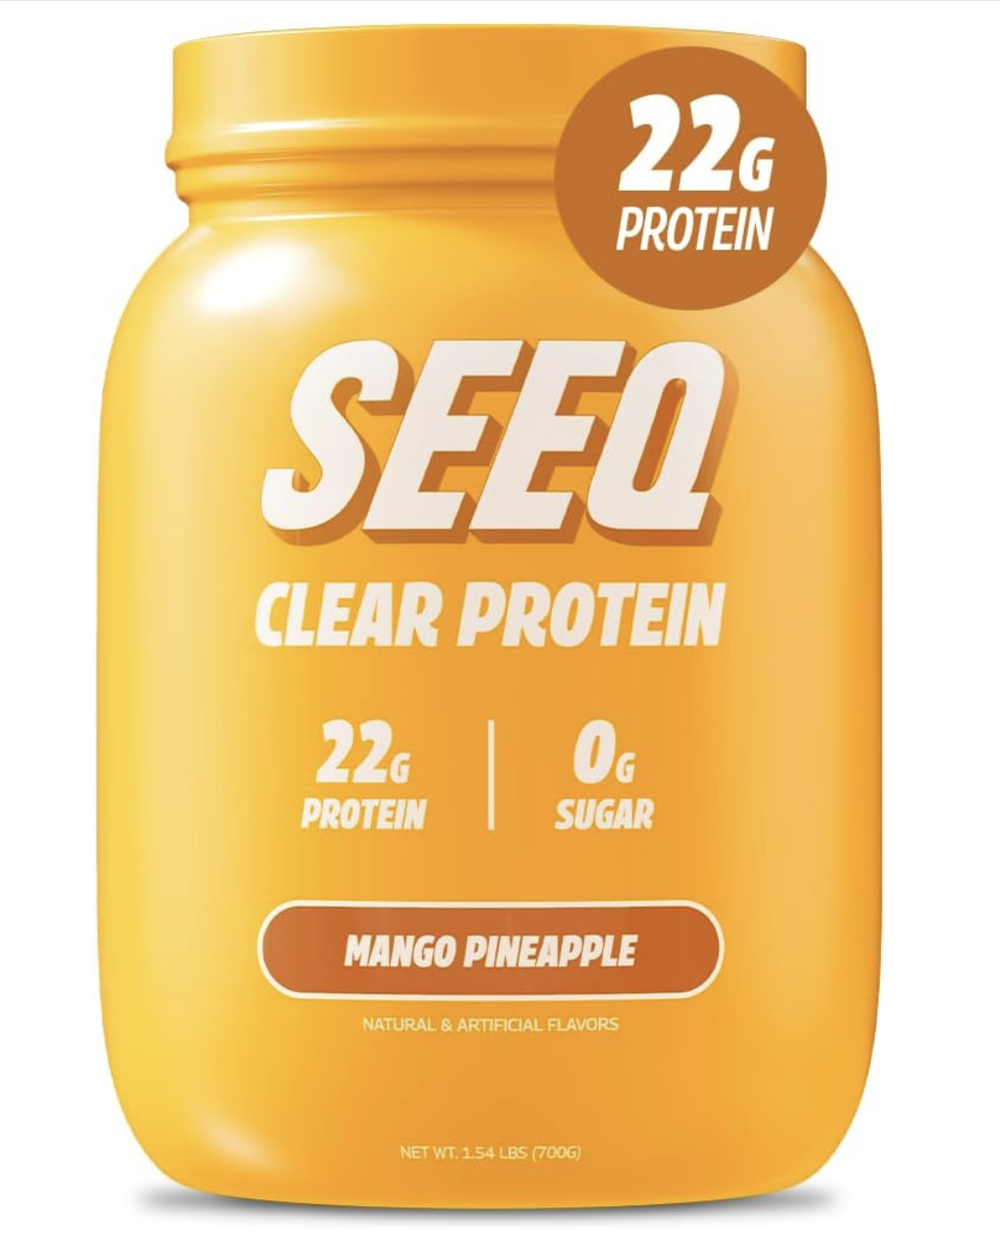 Seeq Clear Protein Powder